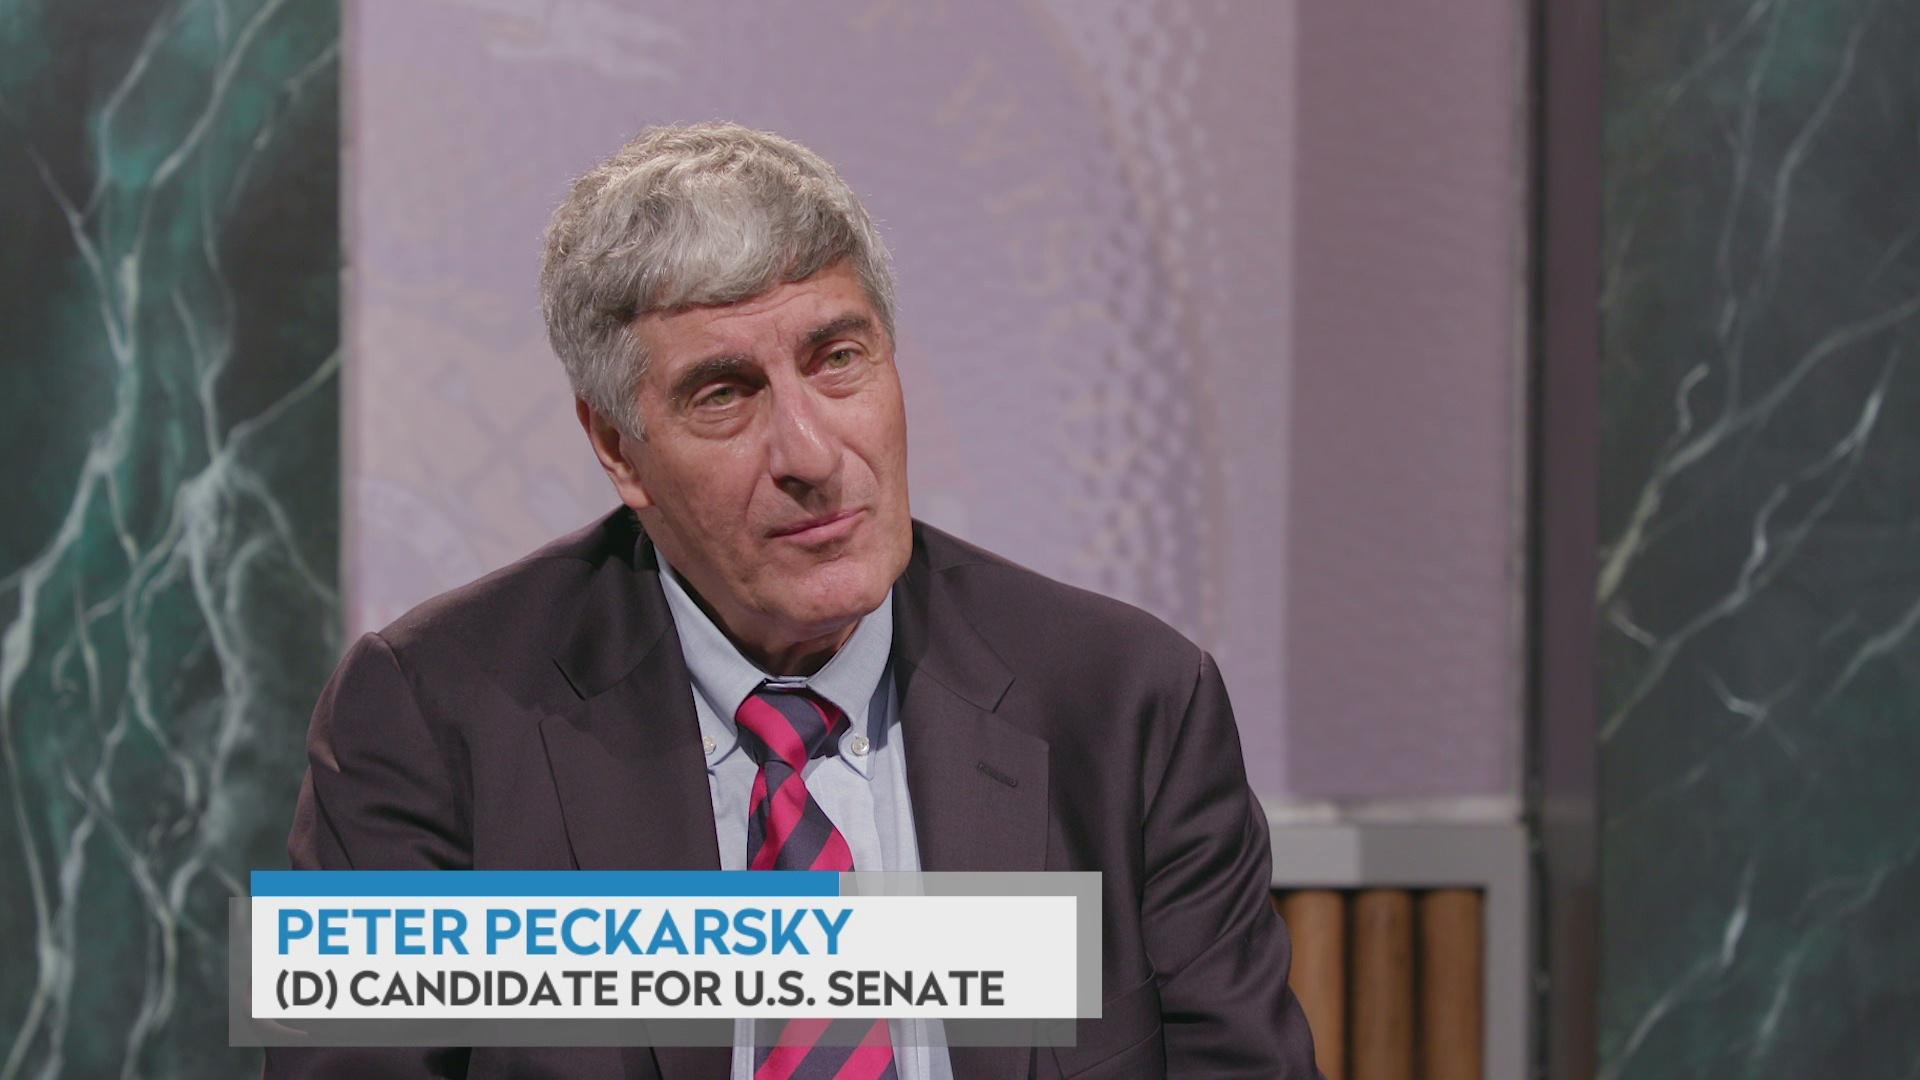 Meet Wisconsin 2022 U.S. Senate candidate Peter Peckarsky